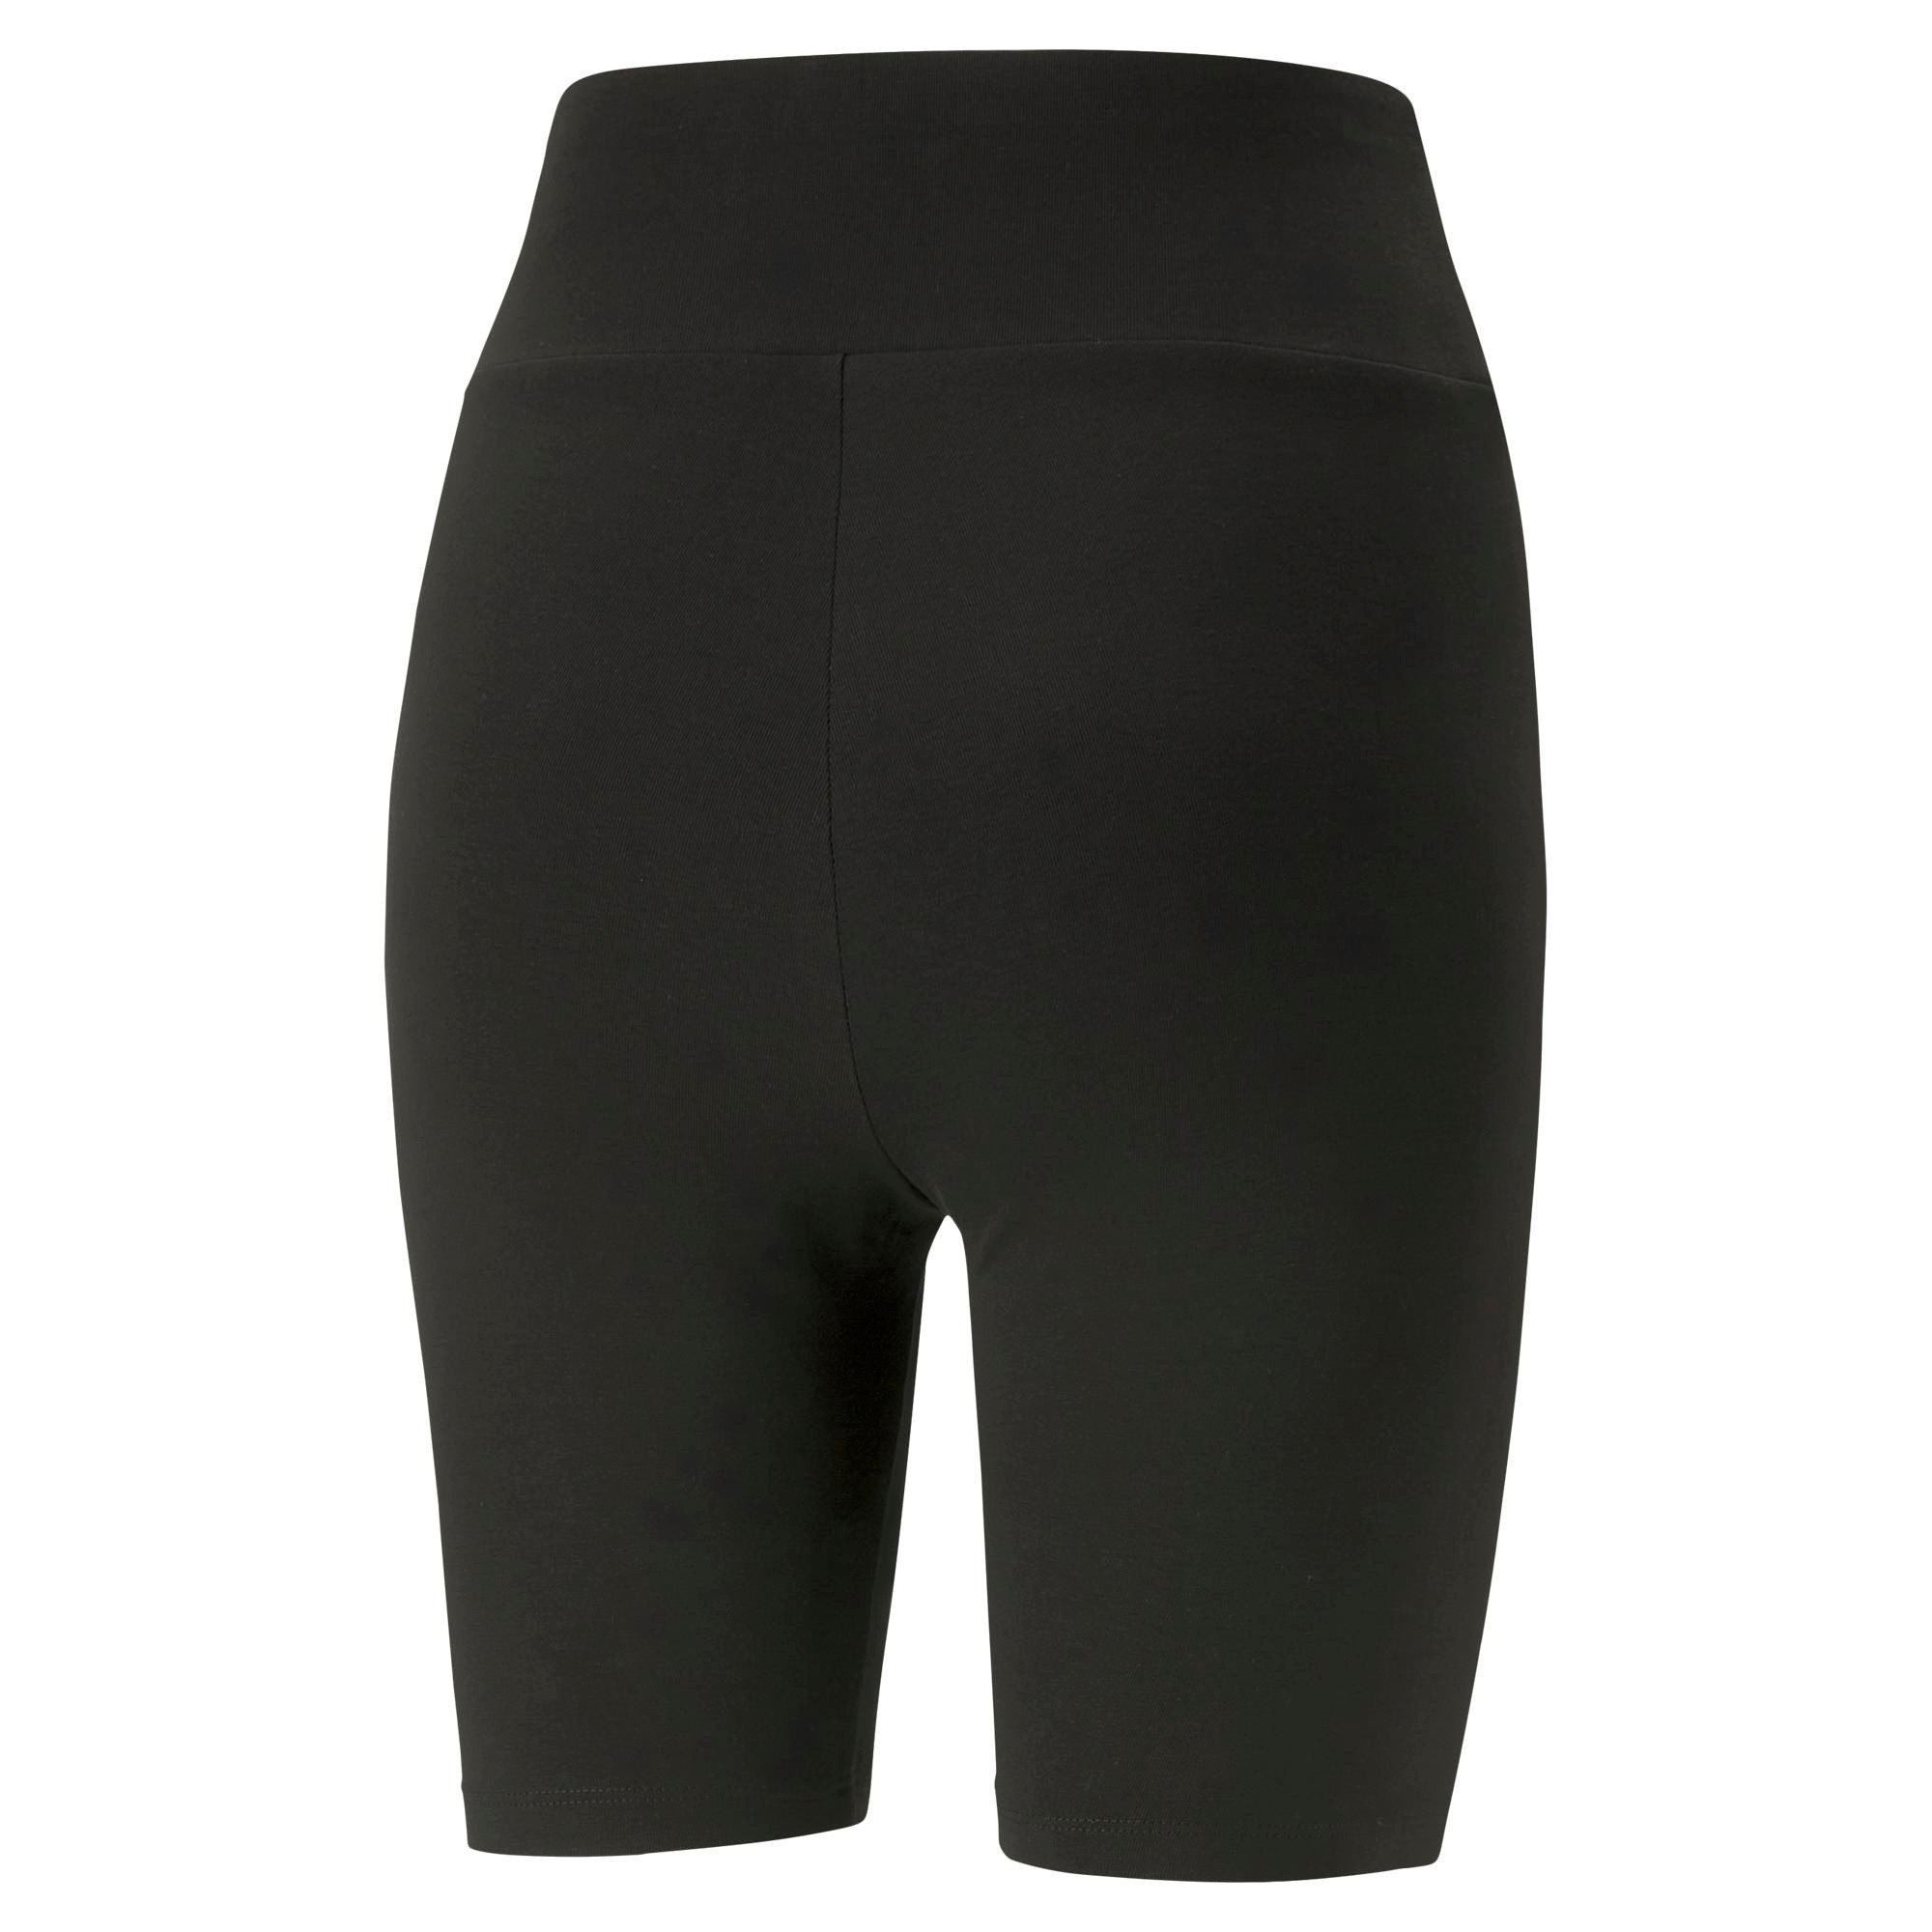 Puma - Cycling shorts, Black, large image number 1